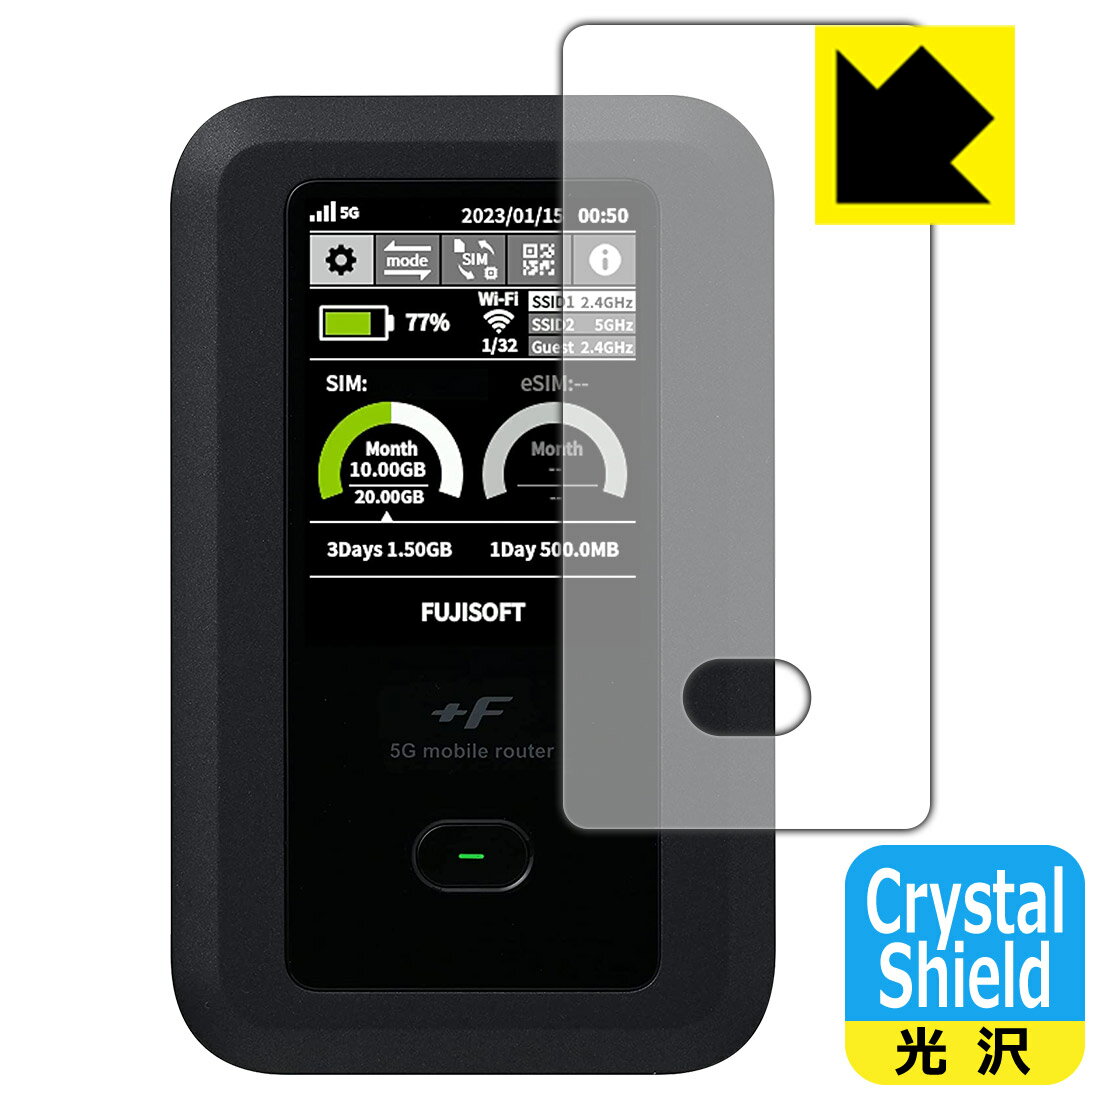 Crystal Shield【光沢】保護フィルム +F FS050W 日本製 自社製造直販